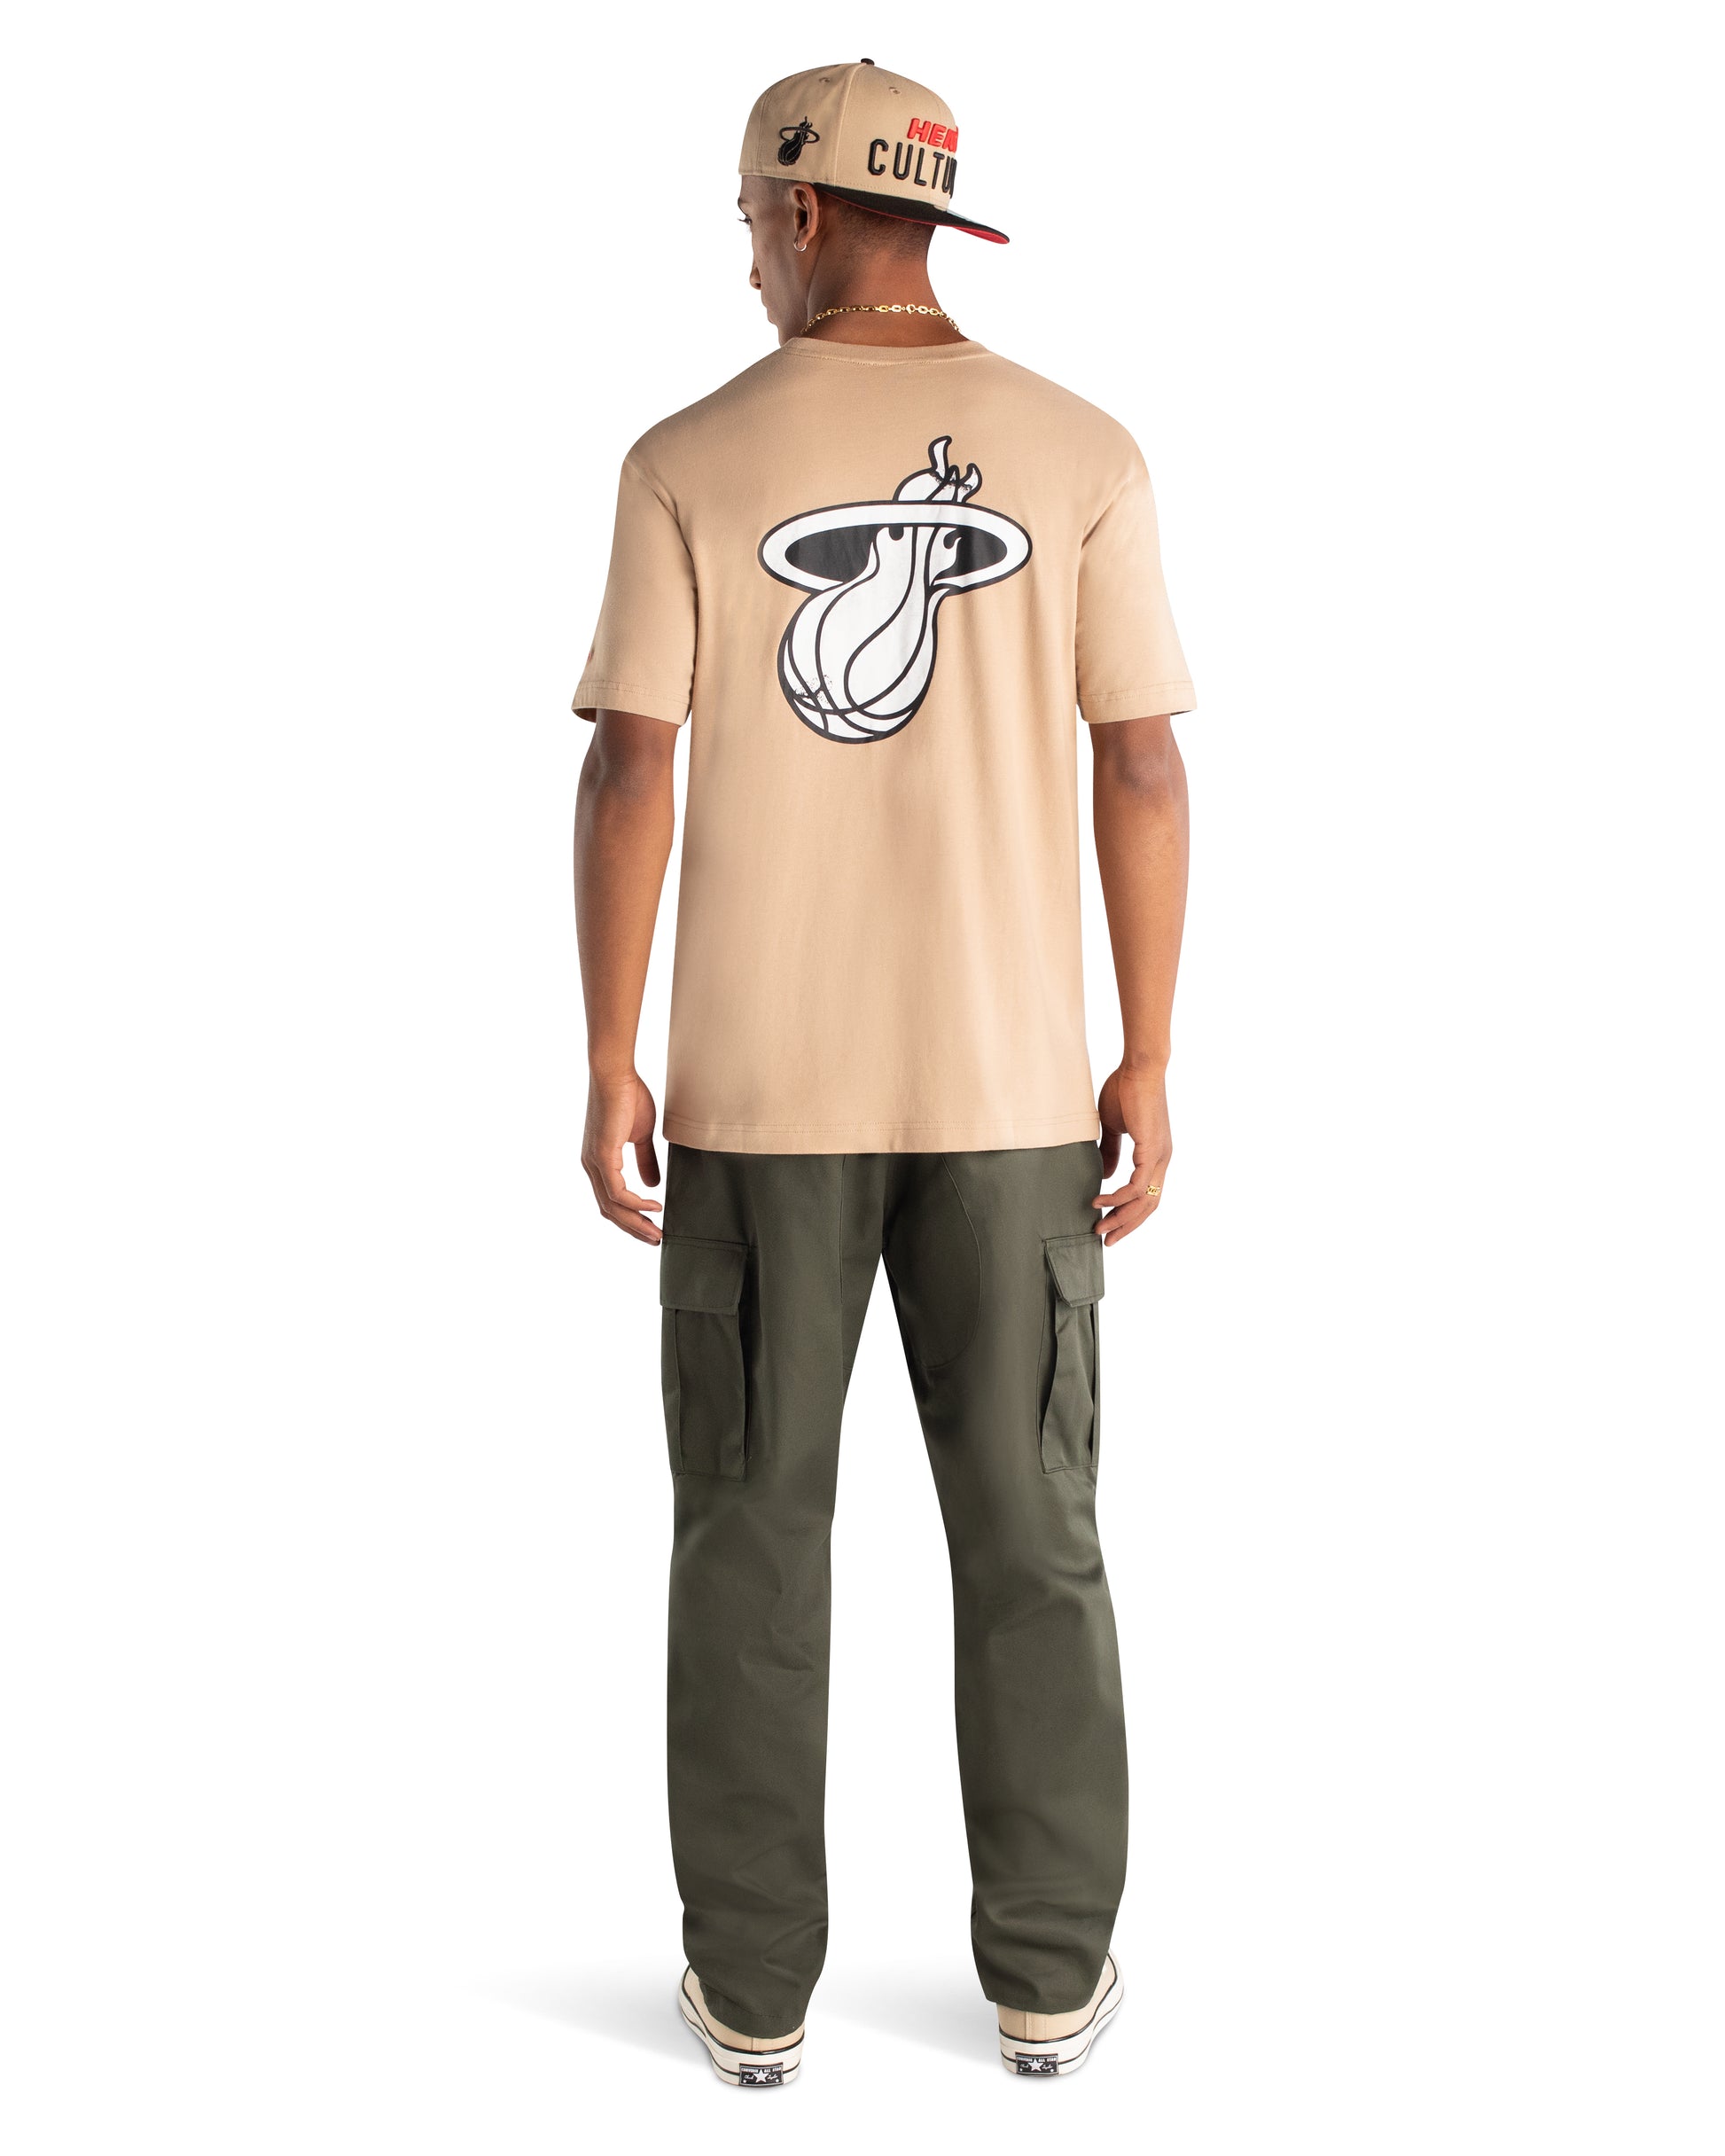 Miami Heat NBA Basketball T-Shirt Size XL And Size Medium Shorts Outfit  Bundle